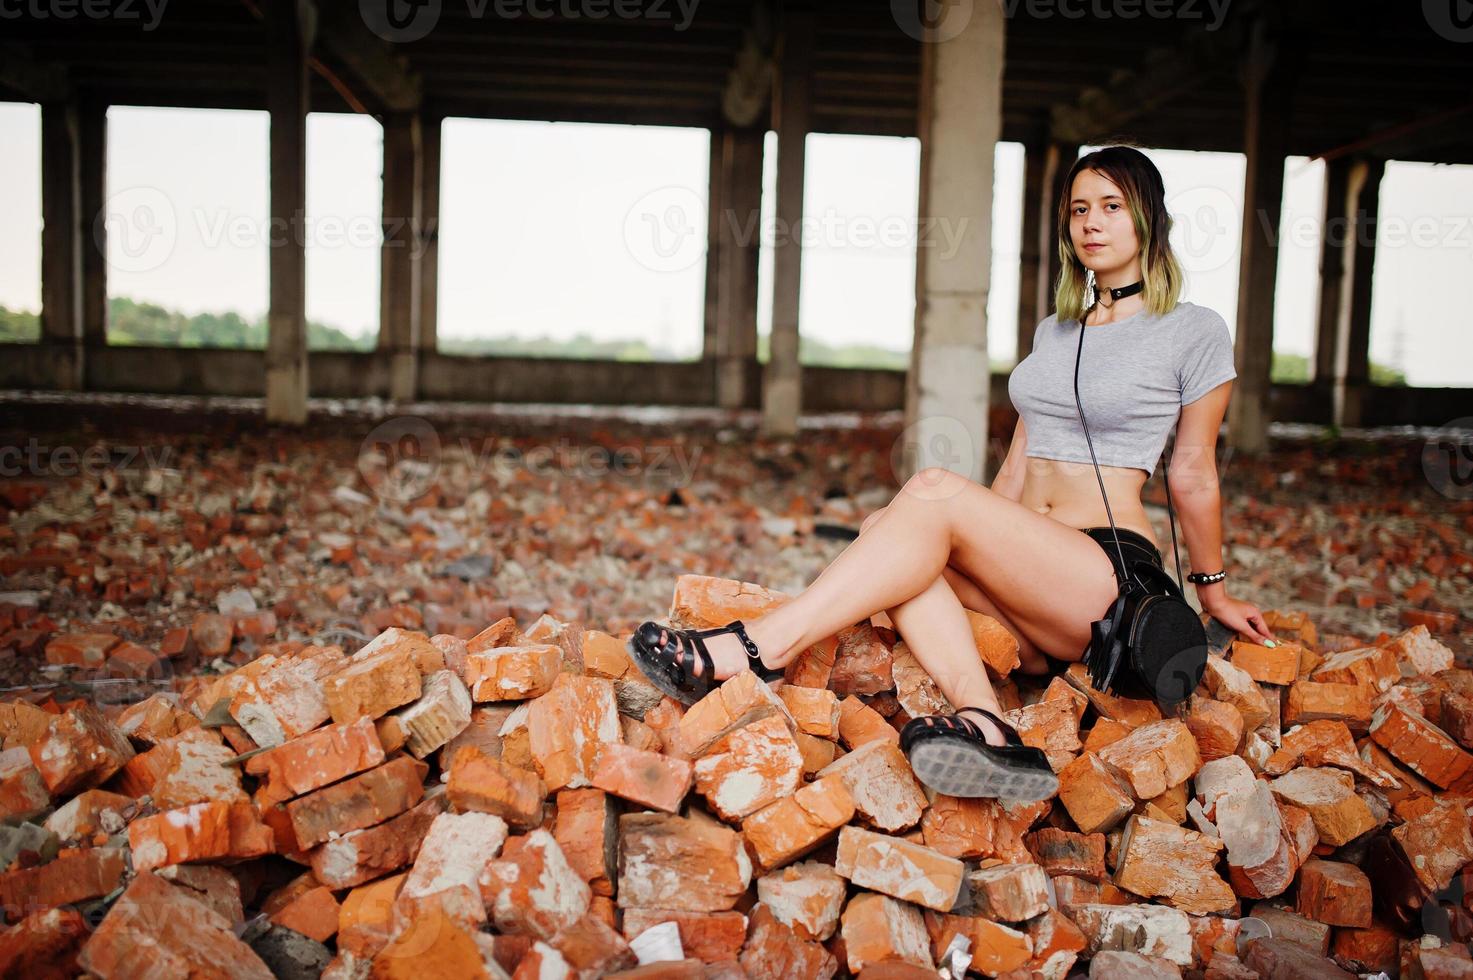 garota usa shorts na fábrica abandonada, sentado no tijolo. foto